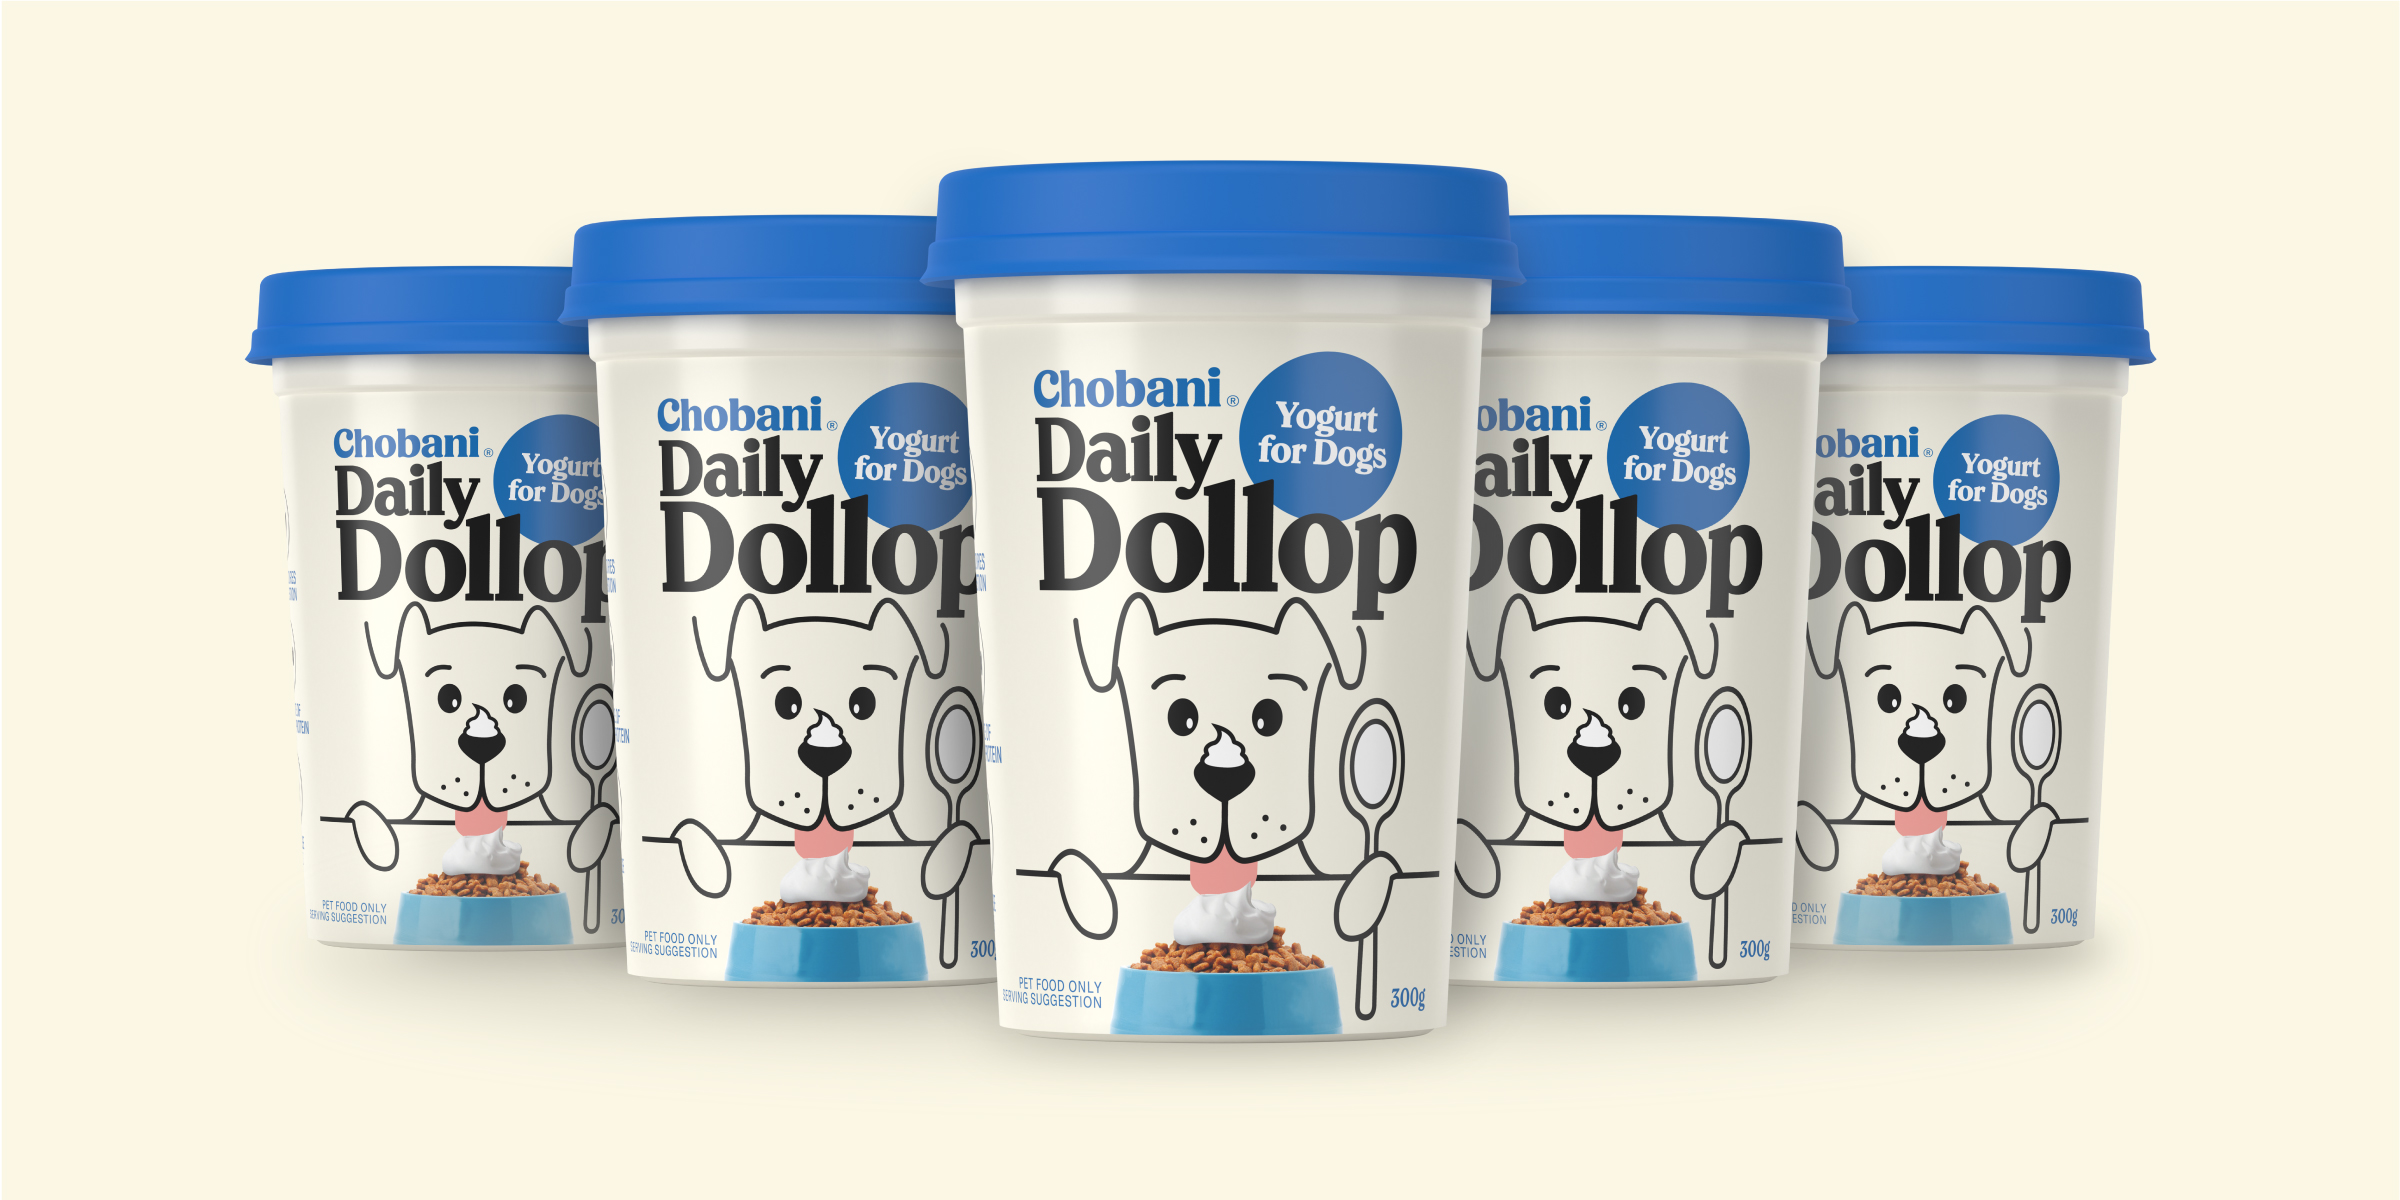 Chobani Daily Dollop - Packaging Design